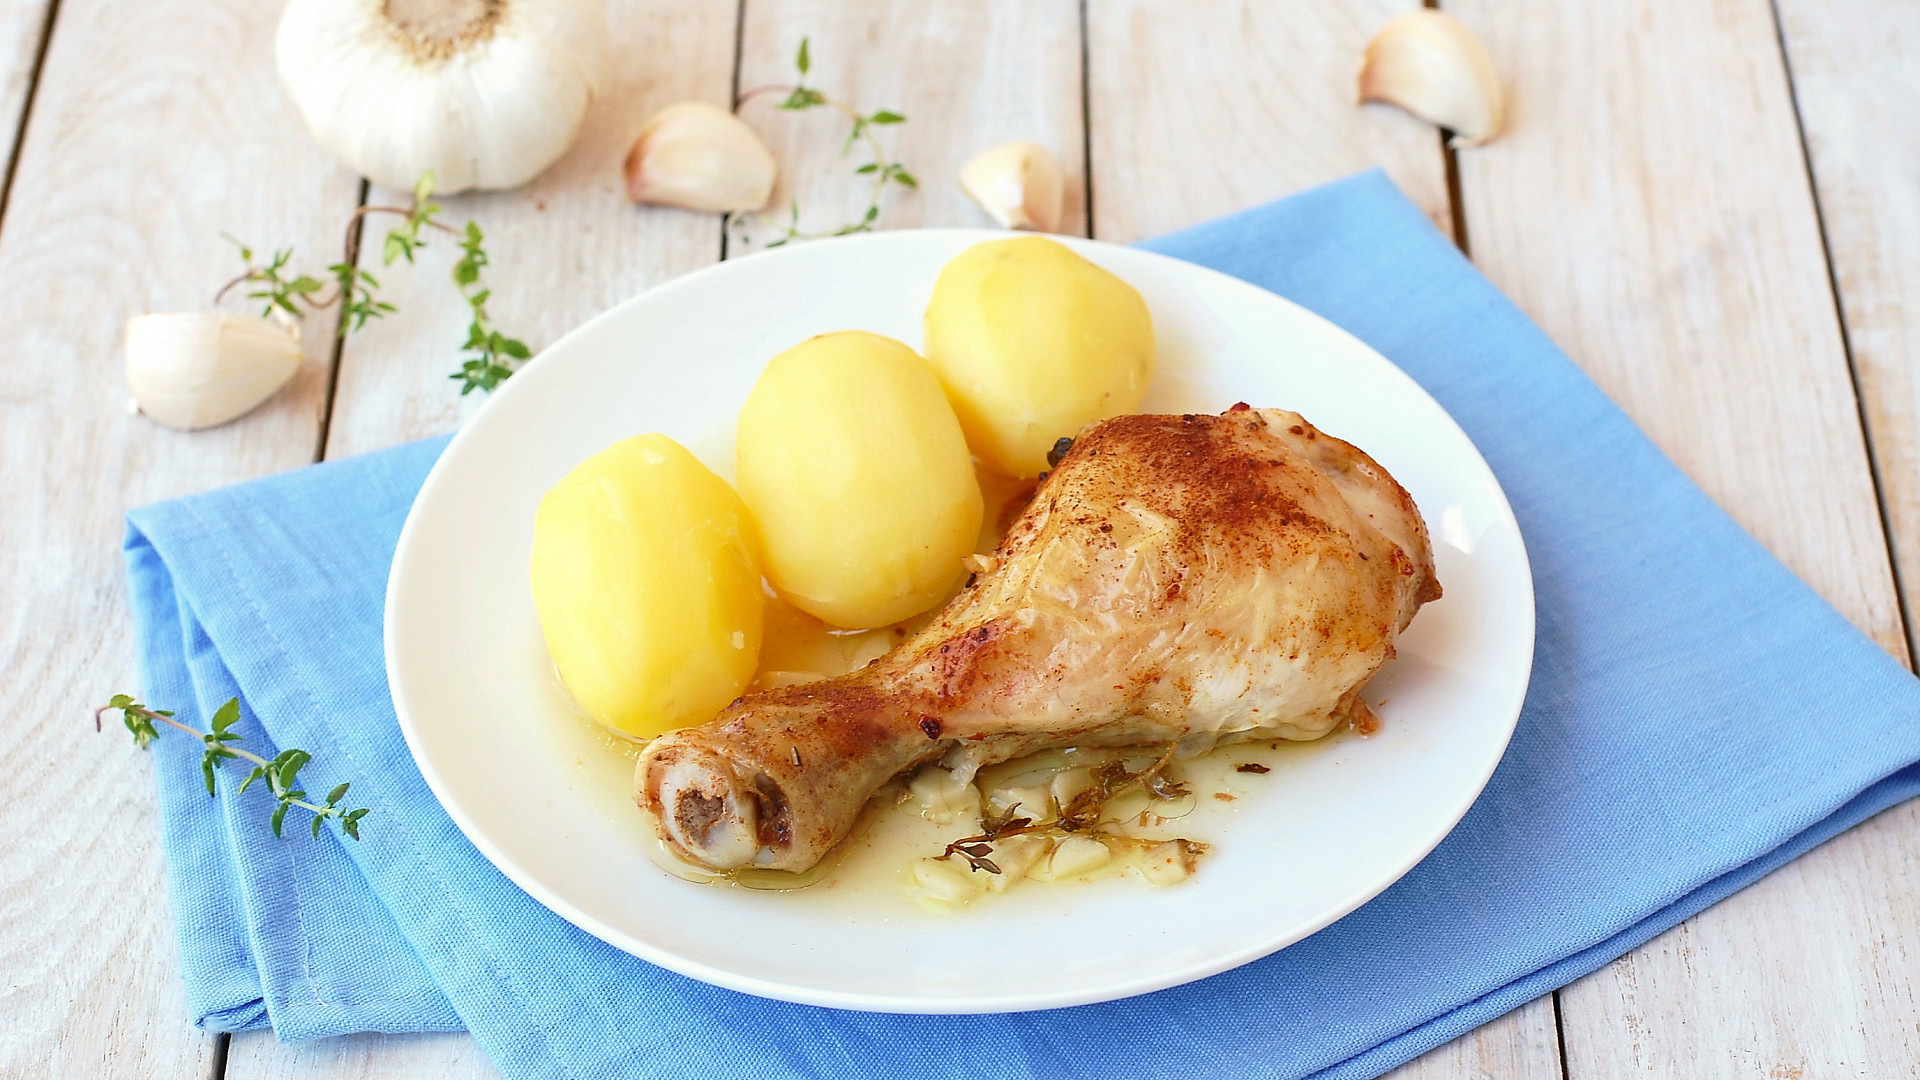 Pečené kuřecí stehno na česneku a tymiánu s brambory